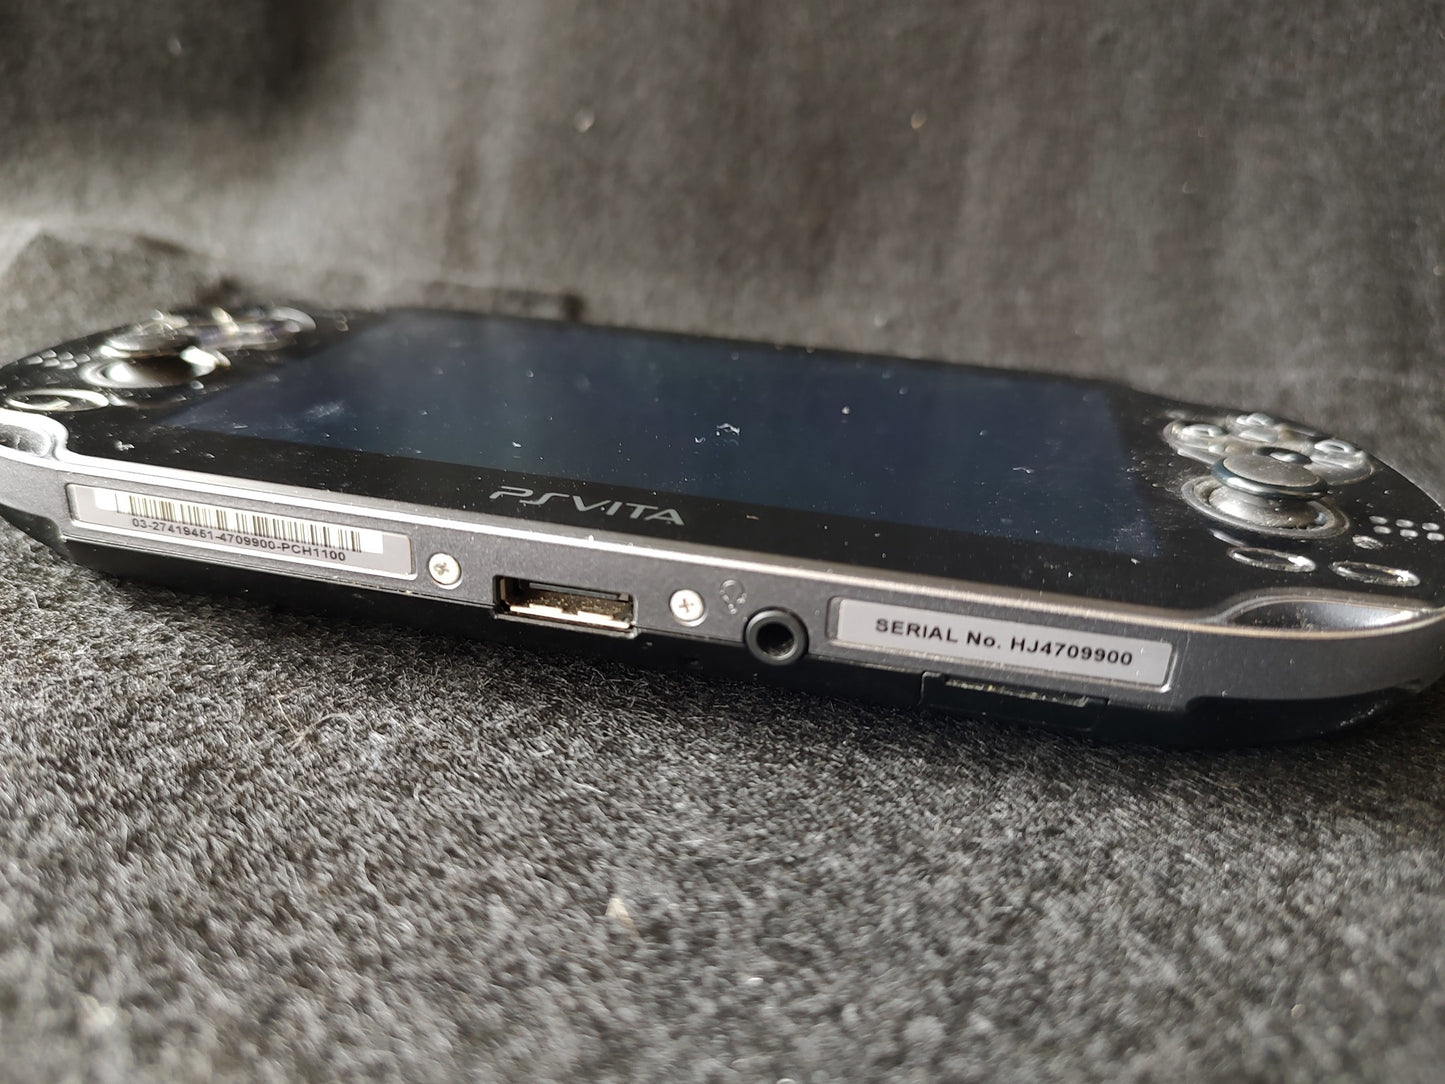 SONY PS Vita PCH-1100 Black Console, w/Manual Box set, Working-f0623-